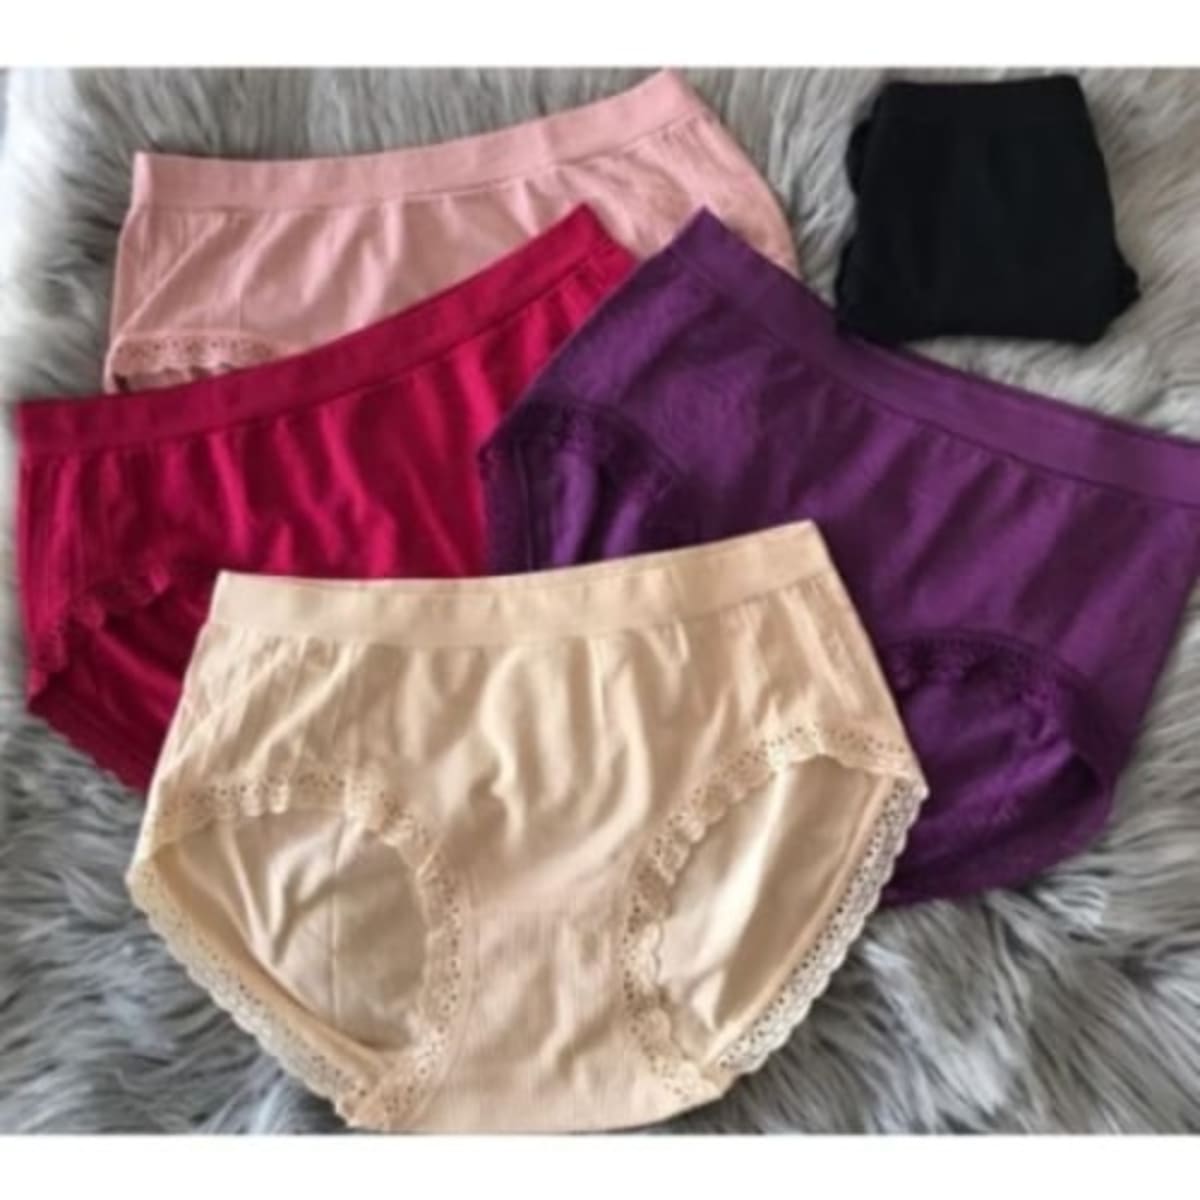 Women's Cotton Panties-6 Pieces